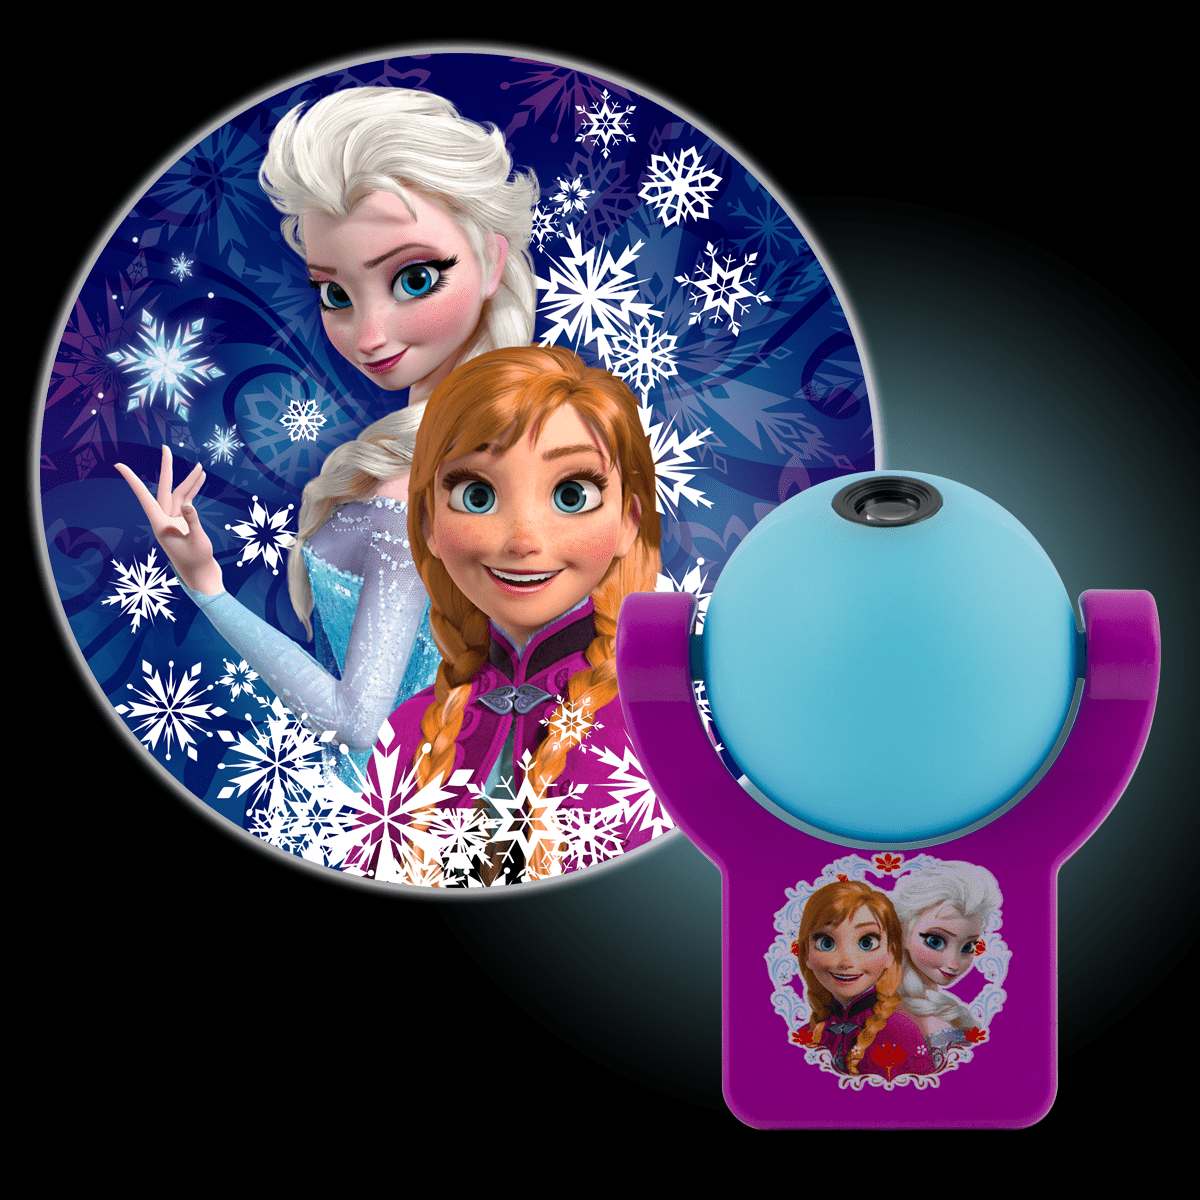 Frozen Elsa Softpal Playful Portable Night Light Friend Children Bedroom Gift 